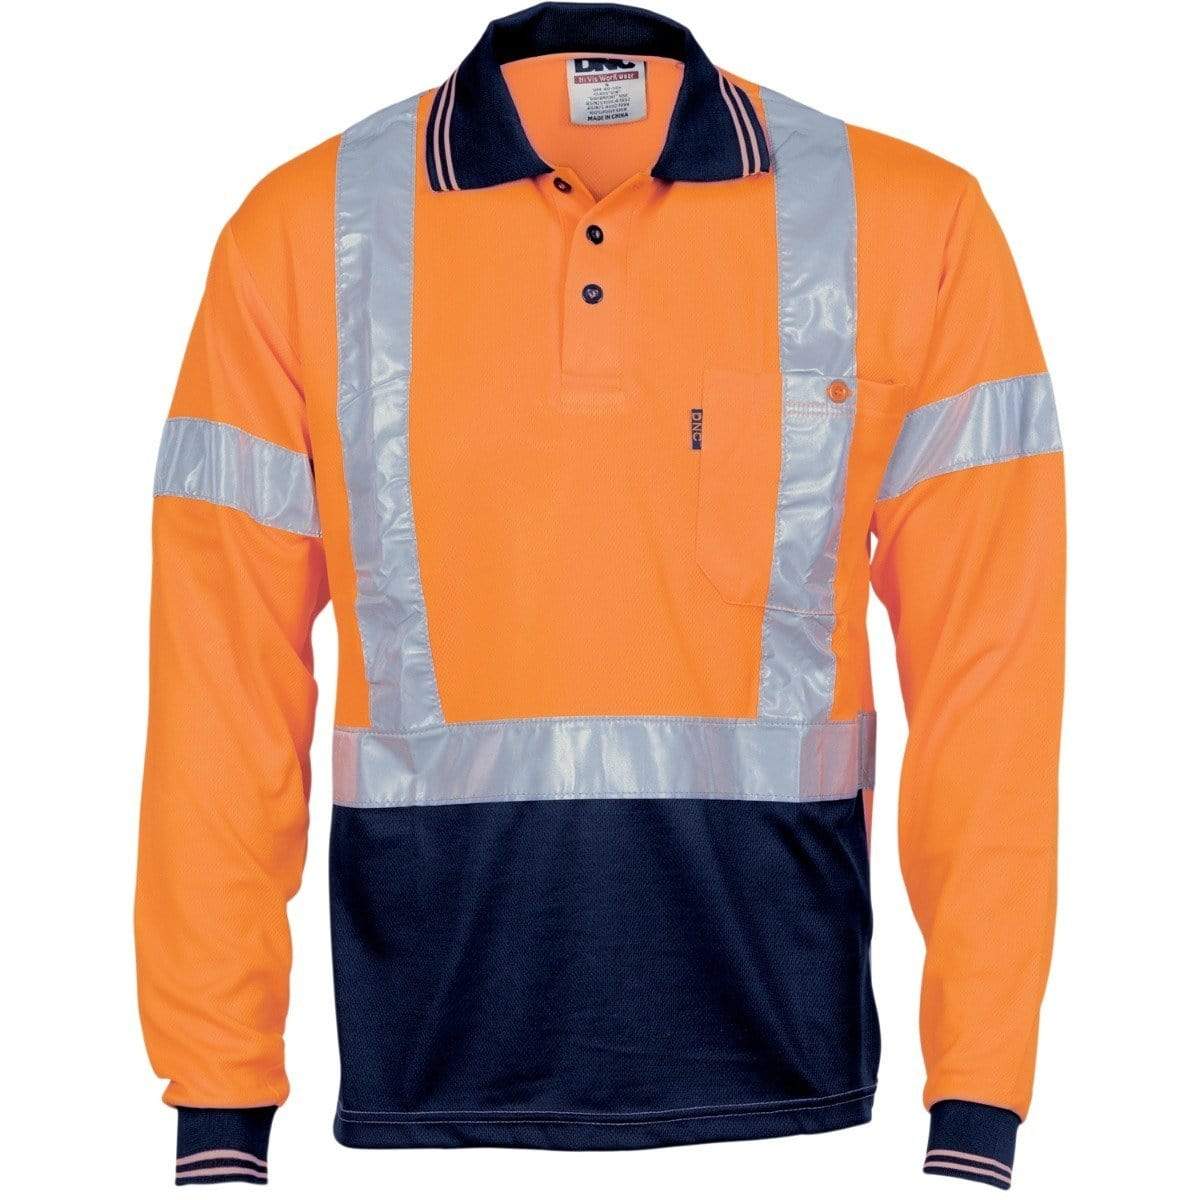 Dnc Workwear Hi-vis D/n Cool Breathe Long Sleeve Polo Shirt With Cross Back Reflective Tape - 3714 Work Wear DNC Workwear Orange XS 